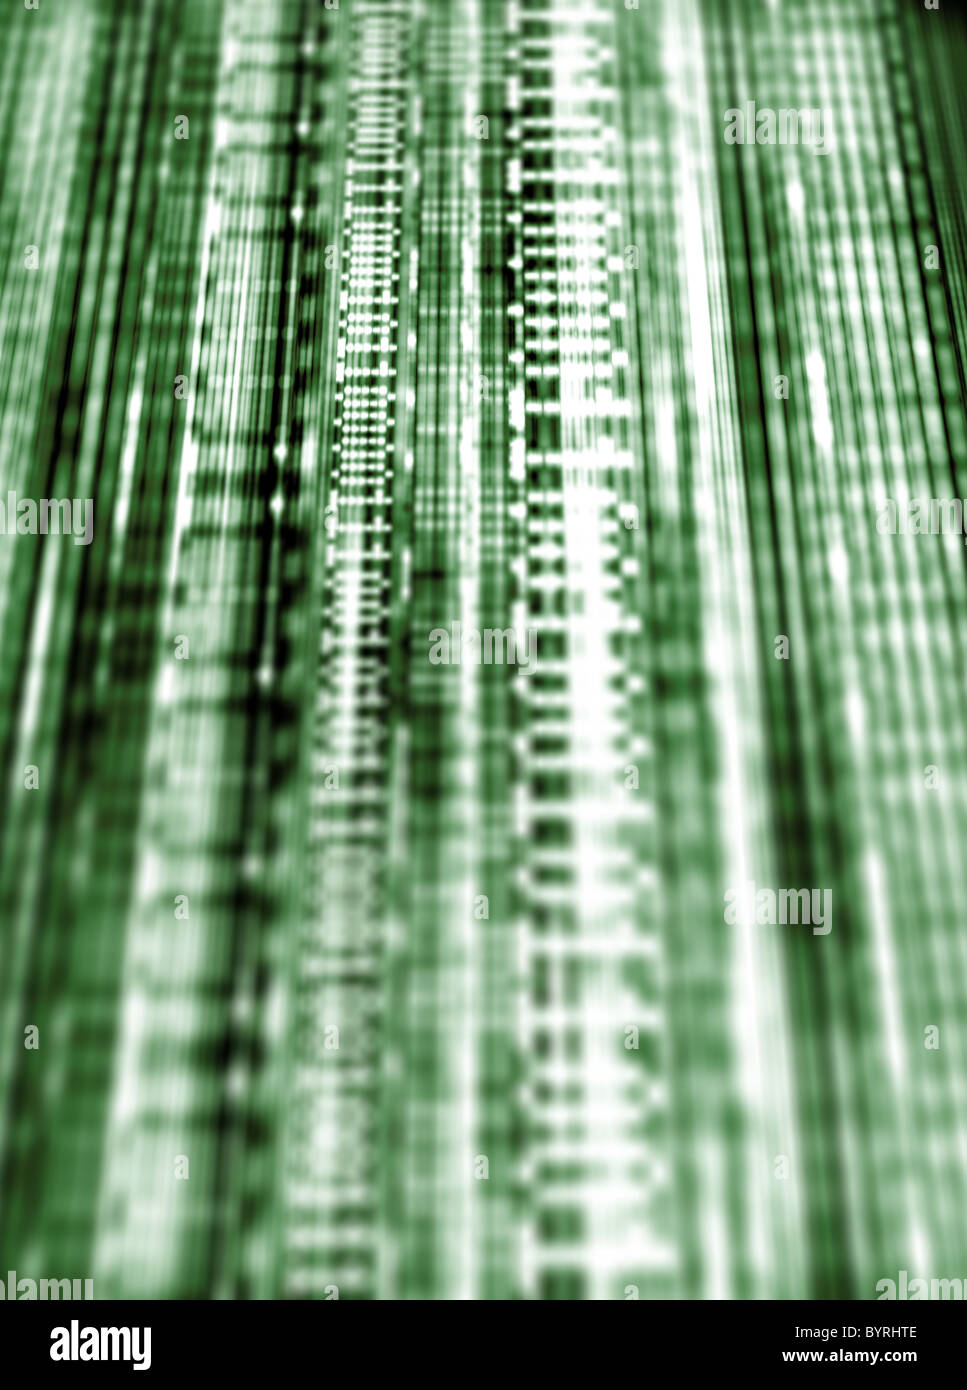 binary code representing online usage, data streams Stock Photo